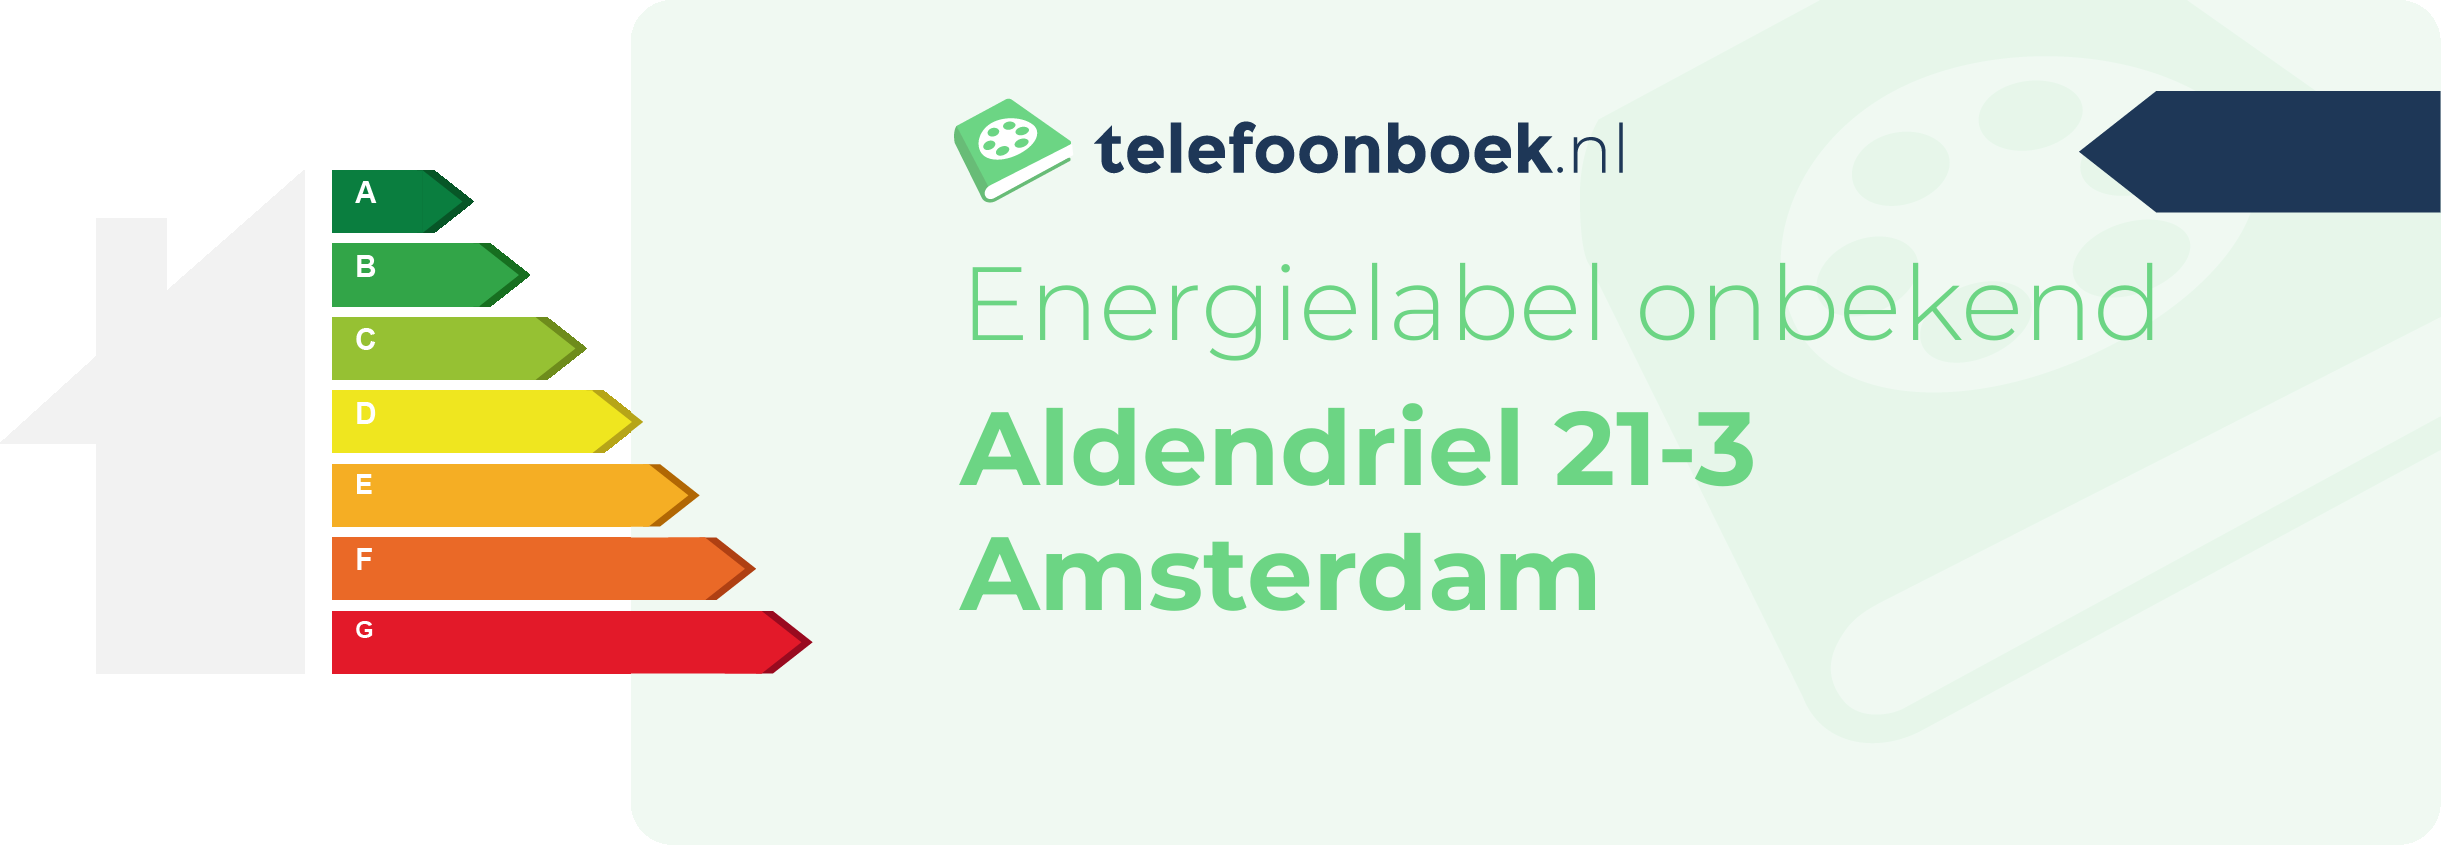 Energielabel Aldendriel 21-3 Amsterdam